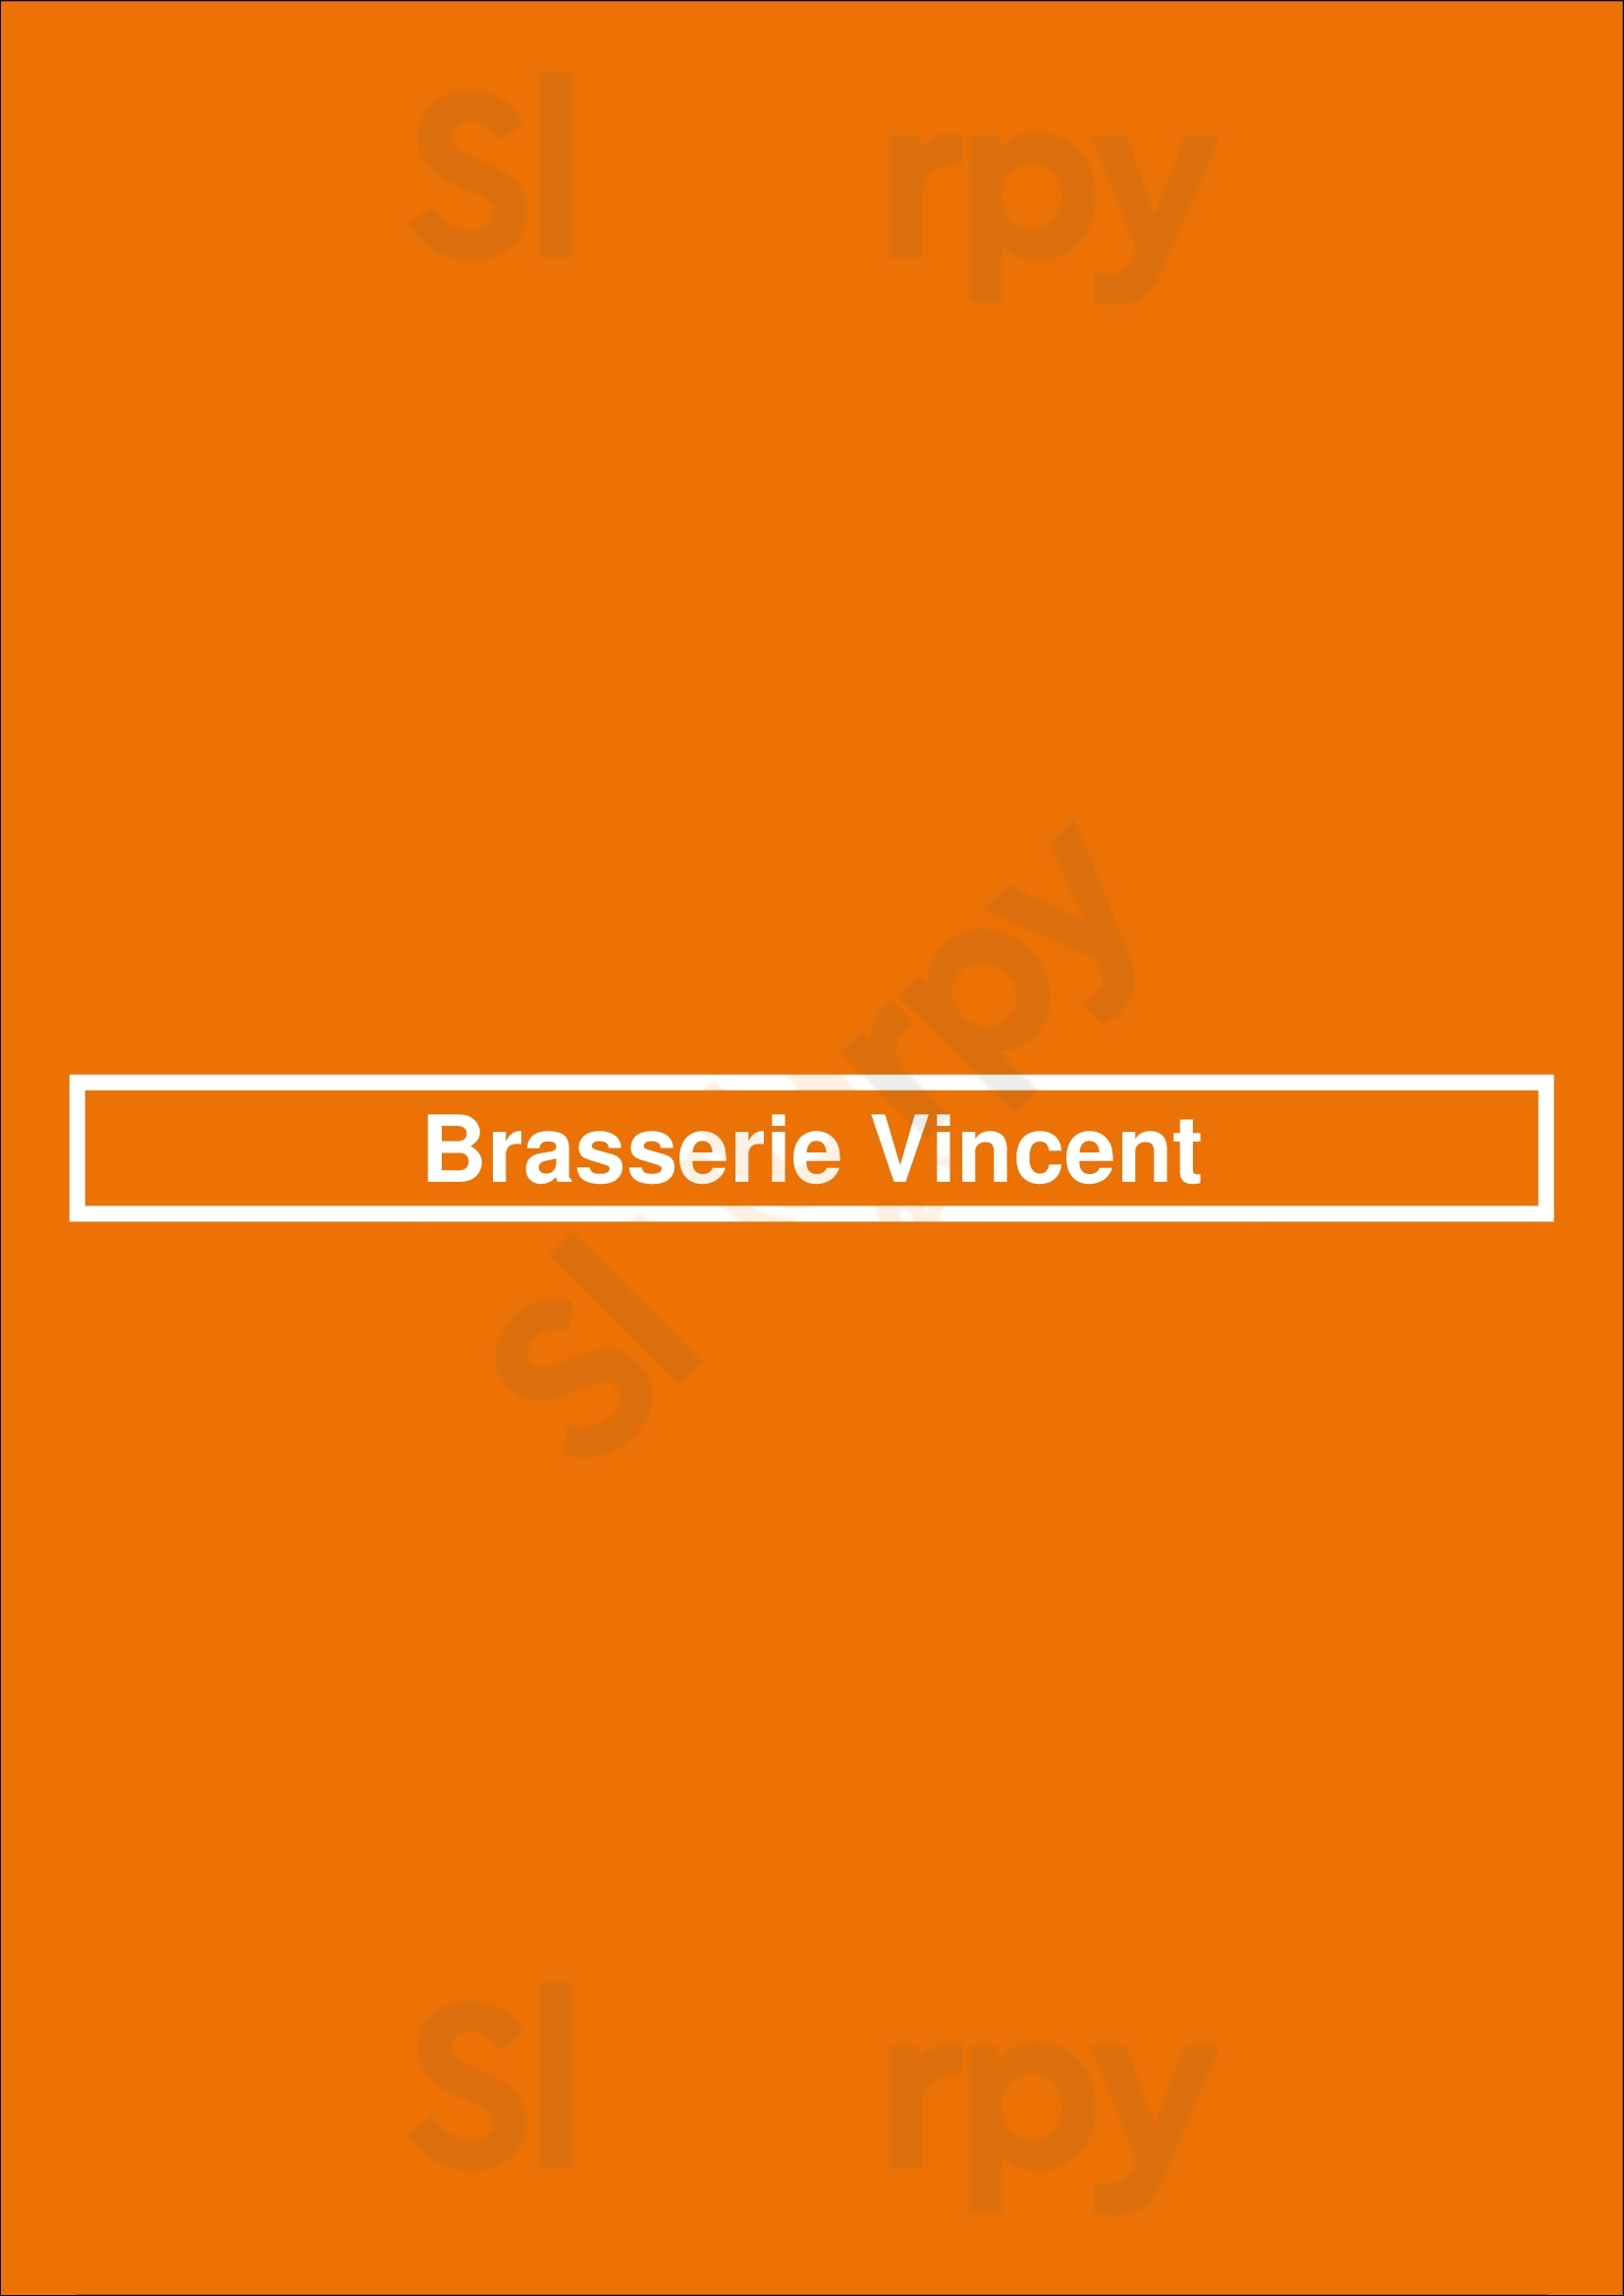 Brasserie Vincent Rotterdam Menu - 1